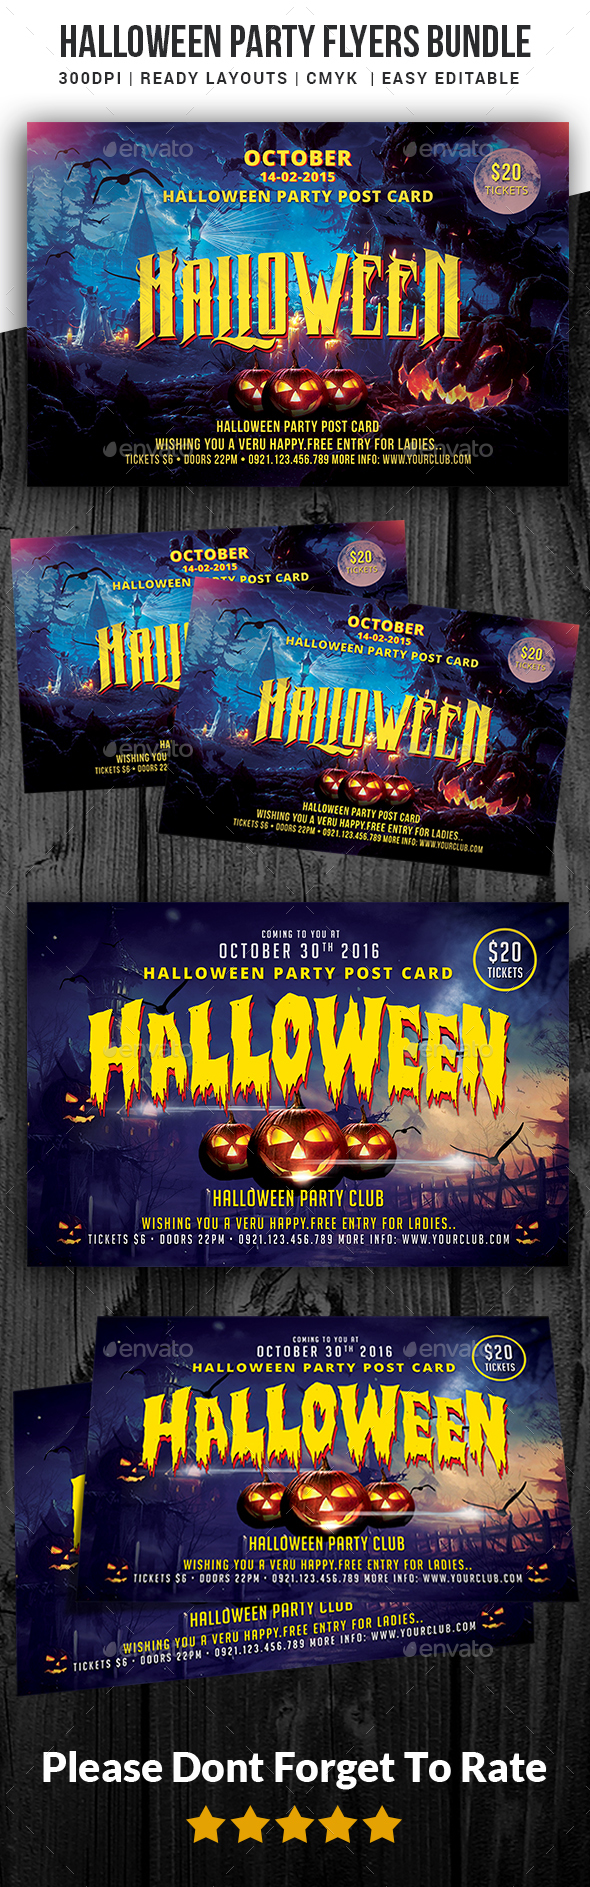 Halloween Party Flyer Bundle